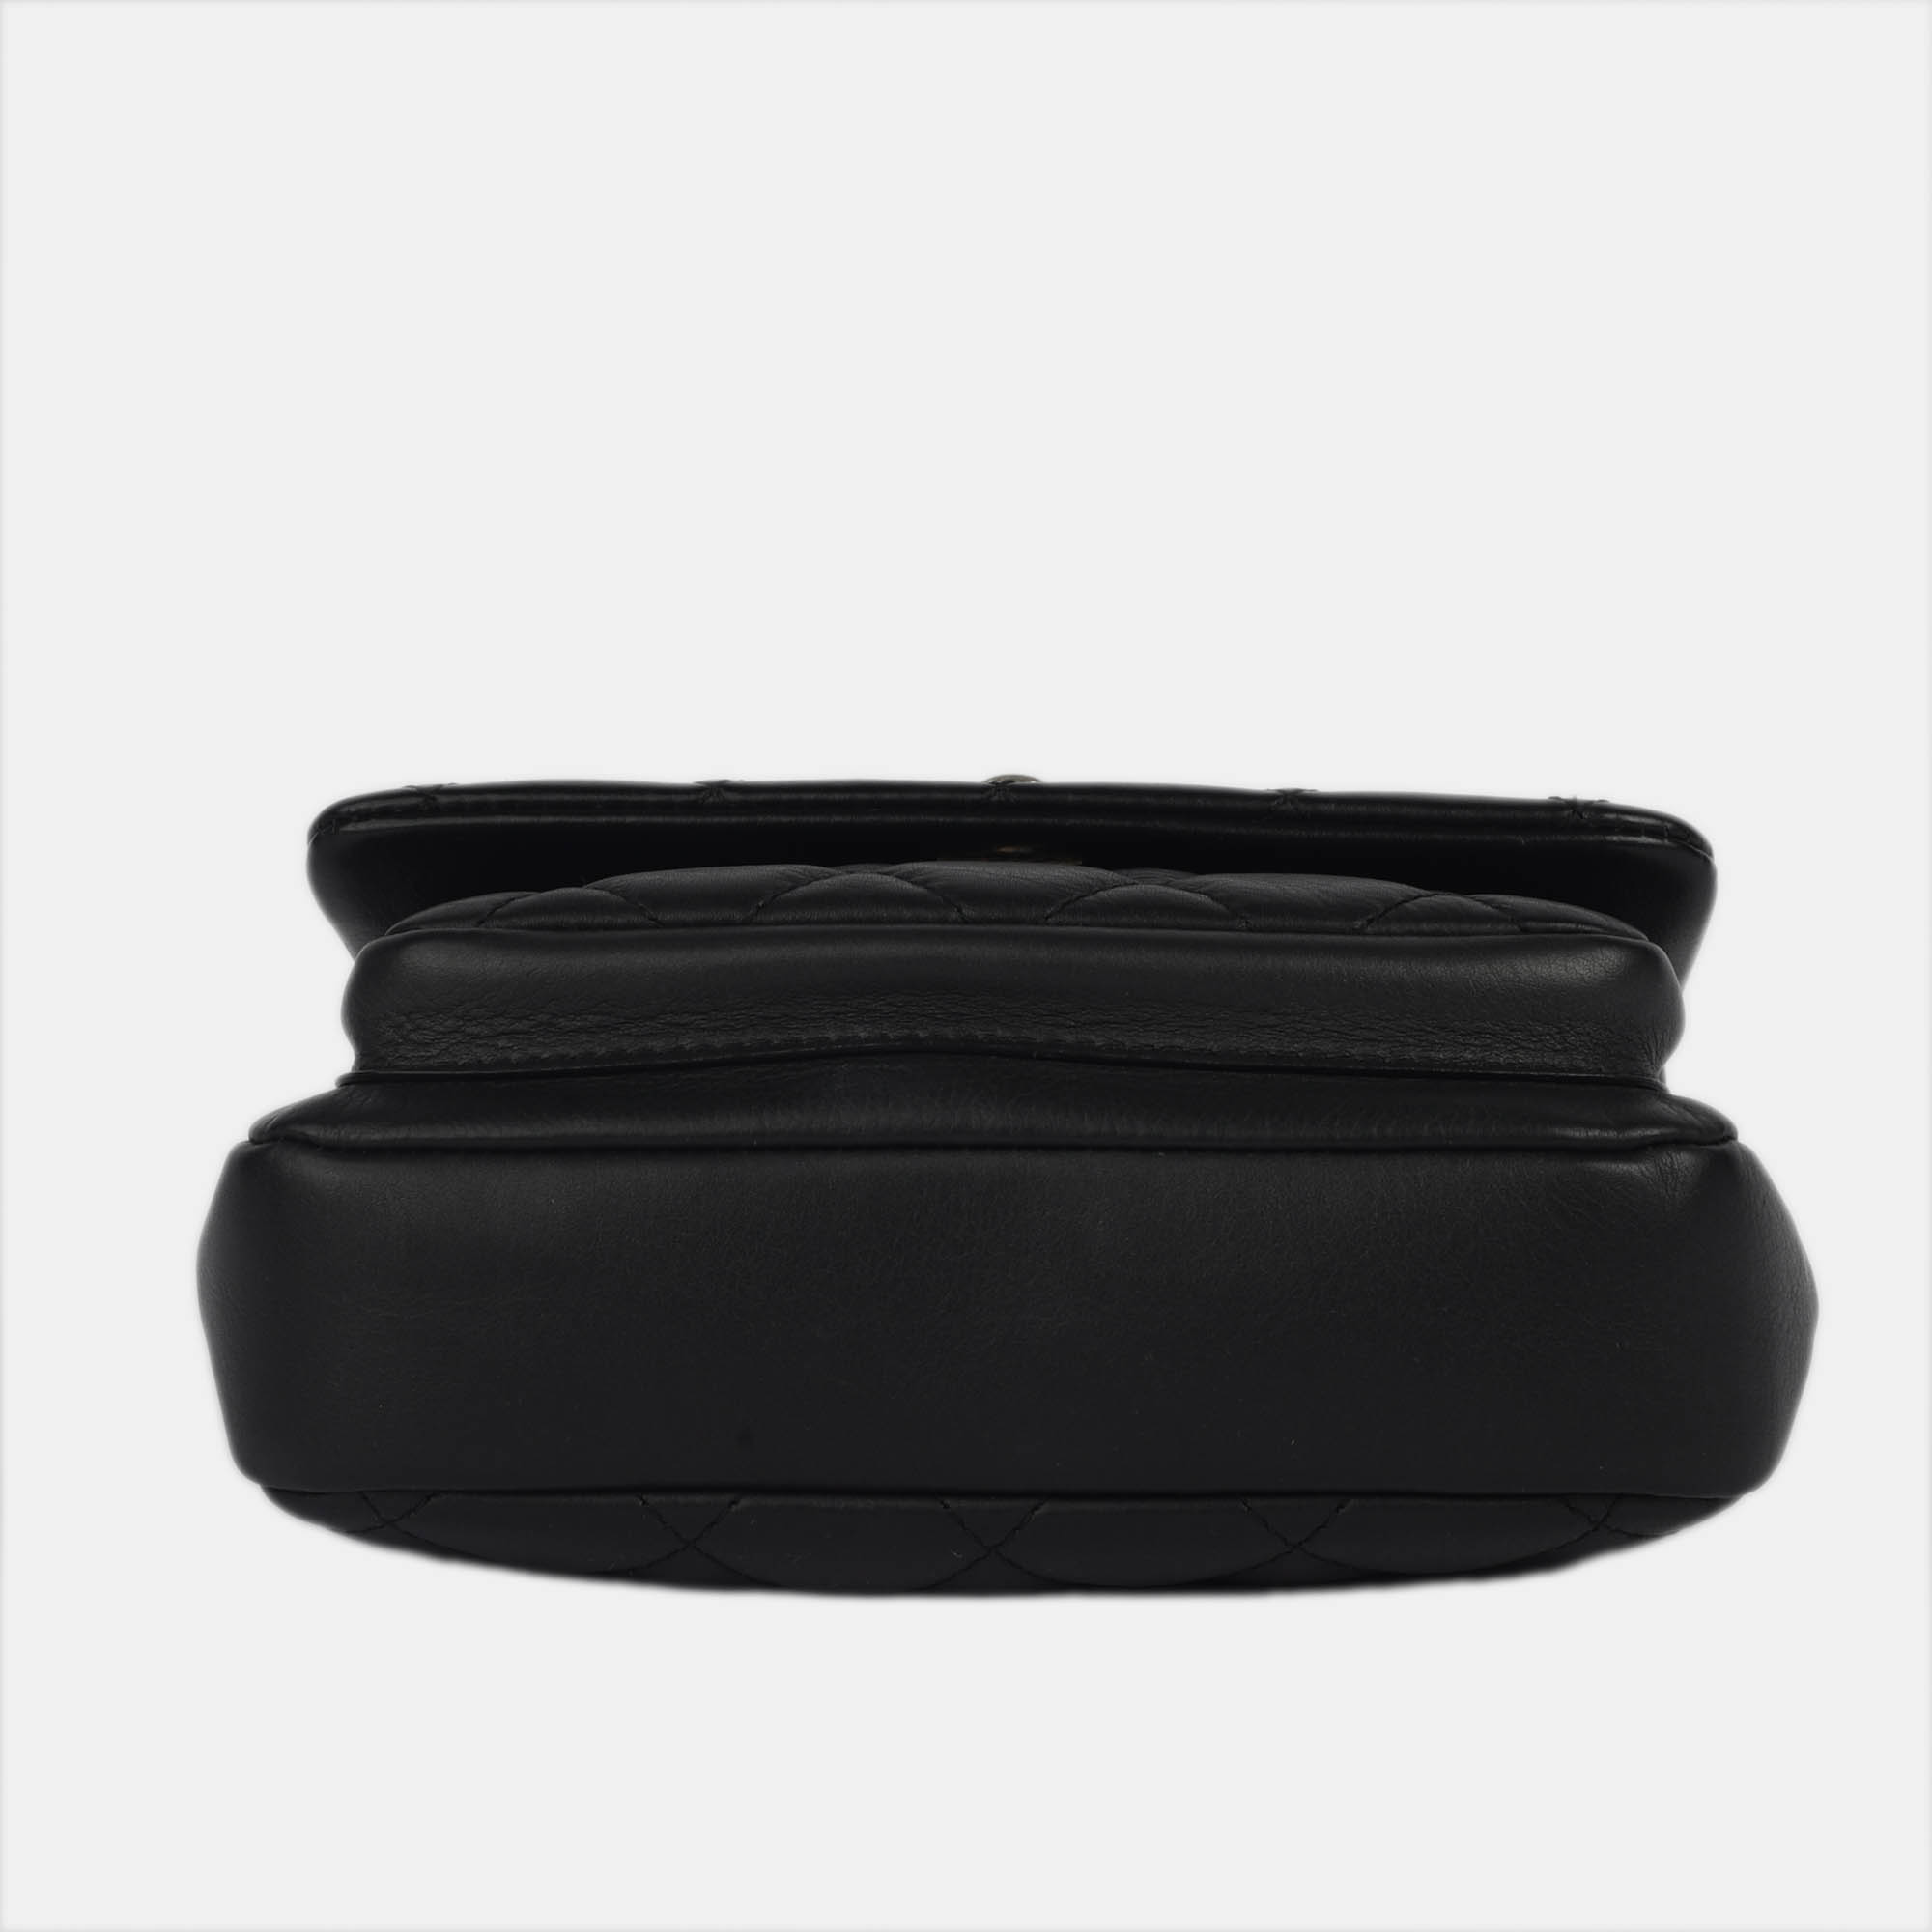 Chanel Black Calfskin Small Affinity Bag